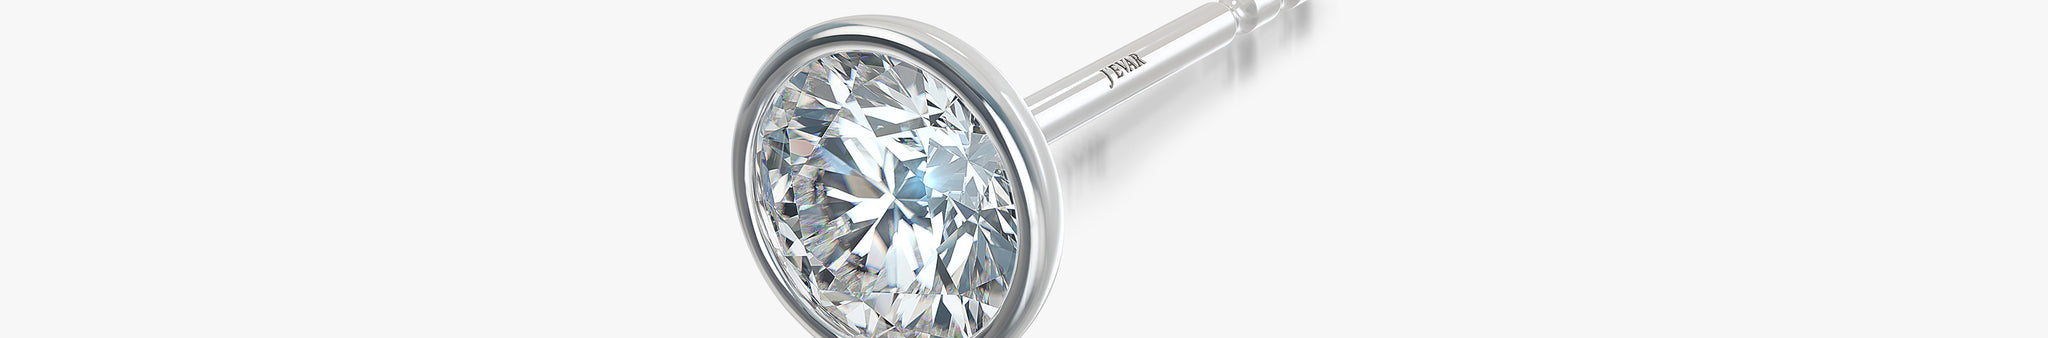 J'EVAR 18KT White Gold Elements ALTR Lab Grown Diamond Earrings Prospective View